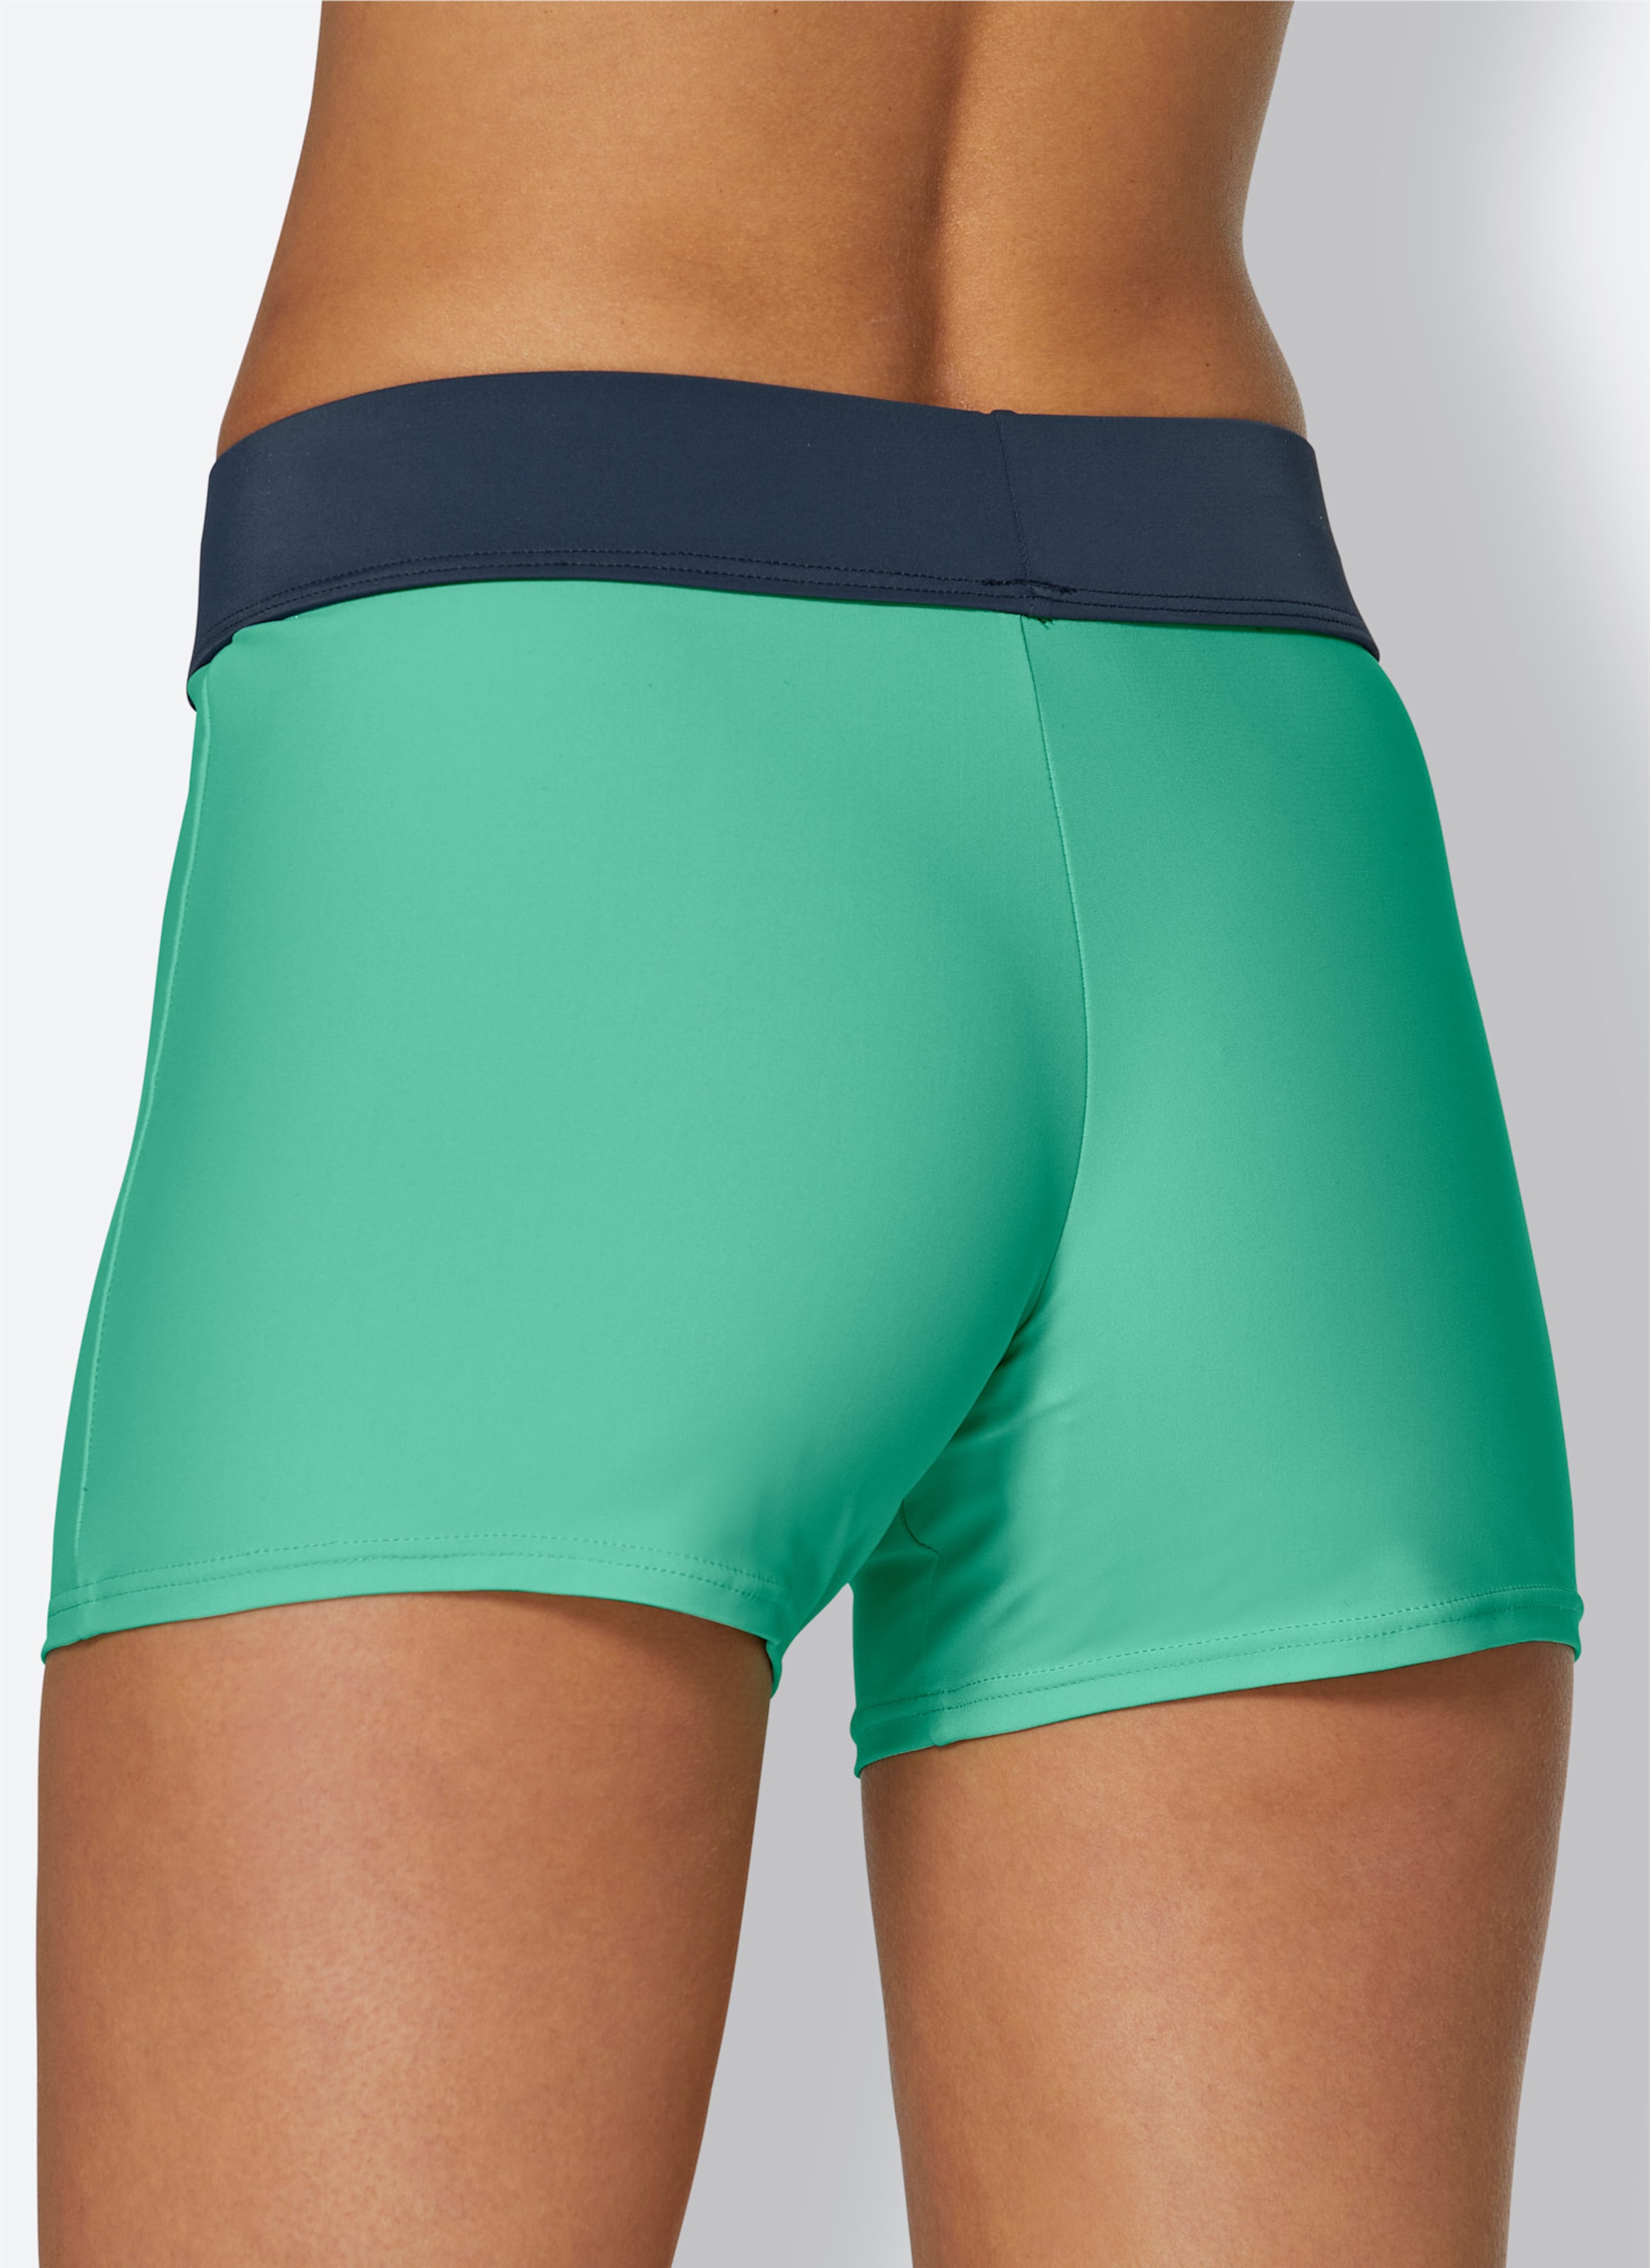 Cameosis/Feel günstig Kaufen-Bikini-Hose in blaugrün von feel good. Bikini-Hose in blaugrün von feel good <![CDATA[Sportive Bikini-Hose mit kontrastfarbiger Blende.]]>. 